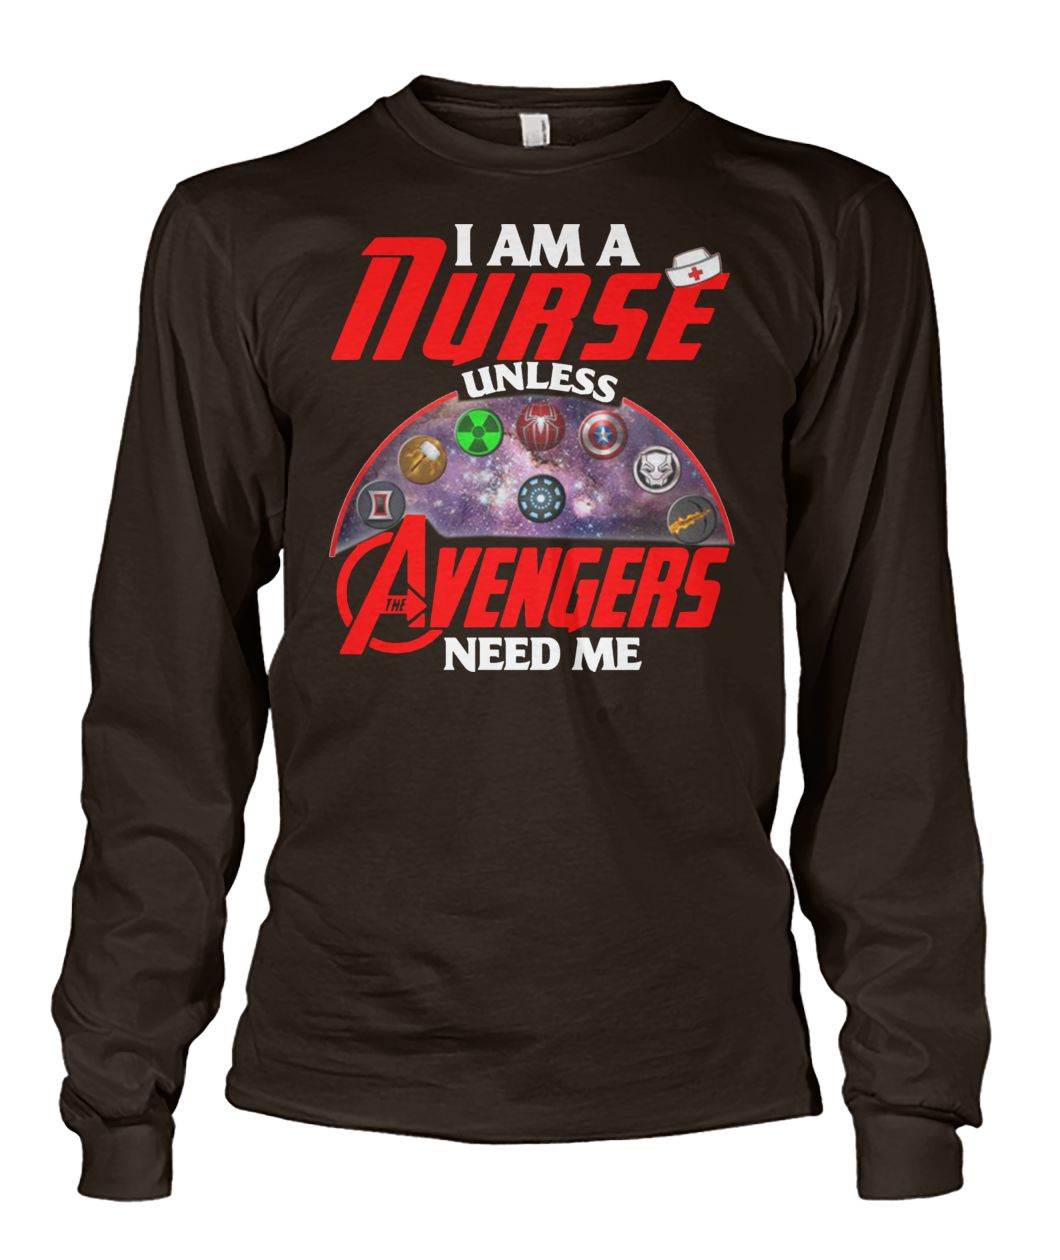 I am a nurse unless avengers need me unisex long sleeve